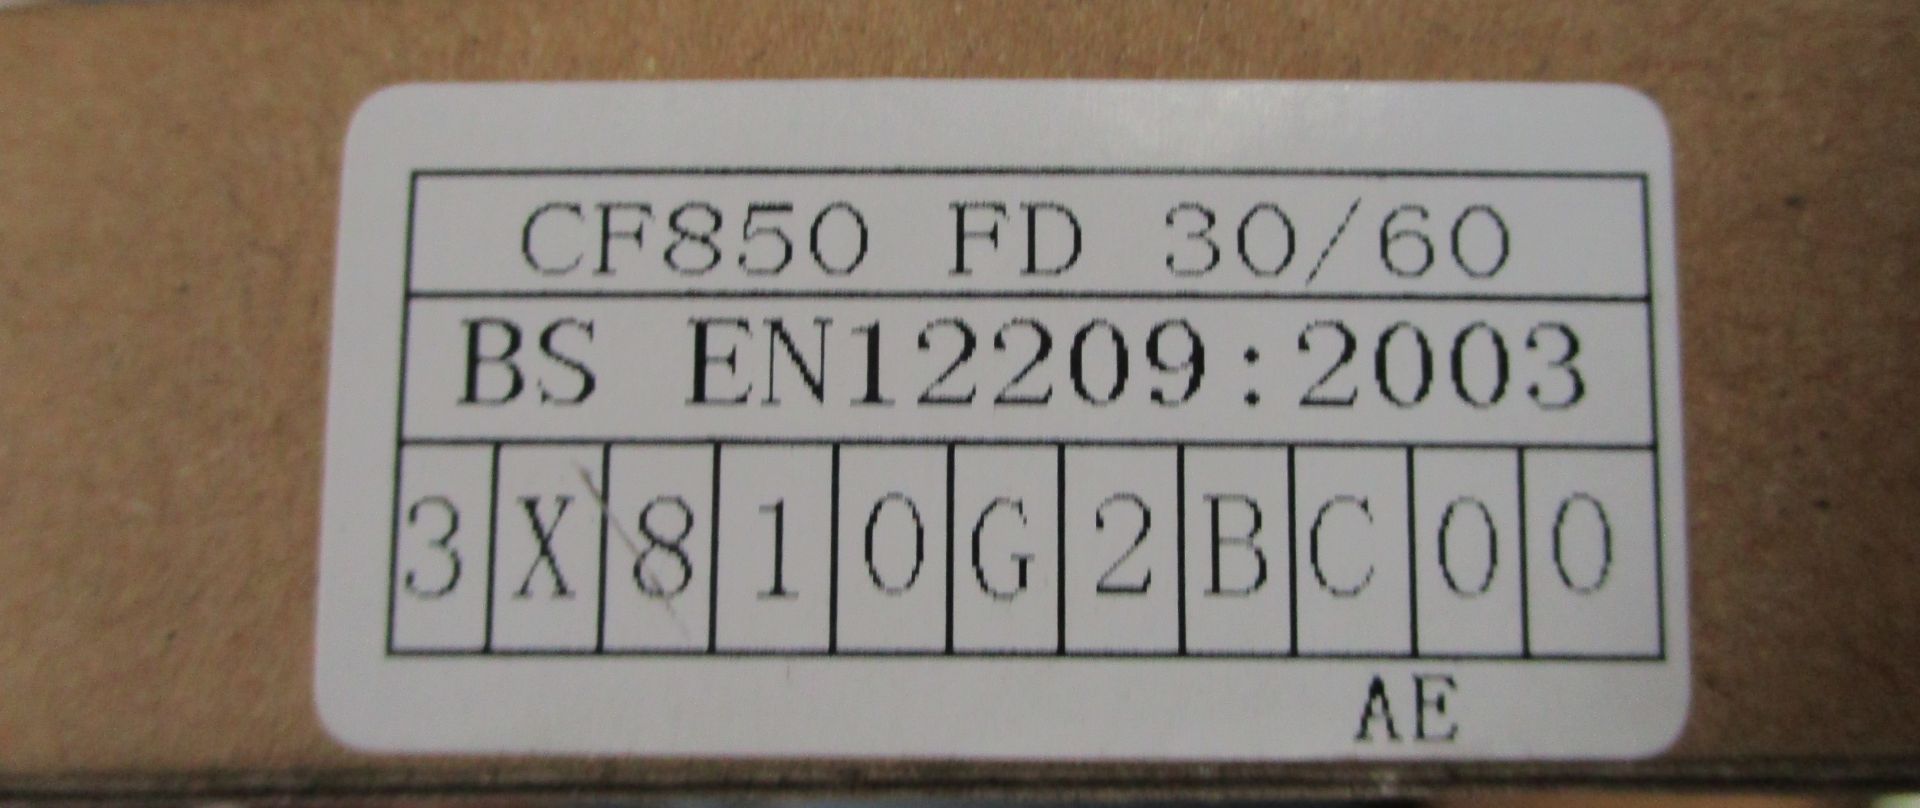 10 x Zoo Hardware DIN Euro Profile Mortice Dead Lock 55mm - Location: Peterlee, SR8 RRP £136.00 - Image 2 of 4